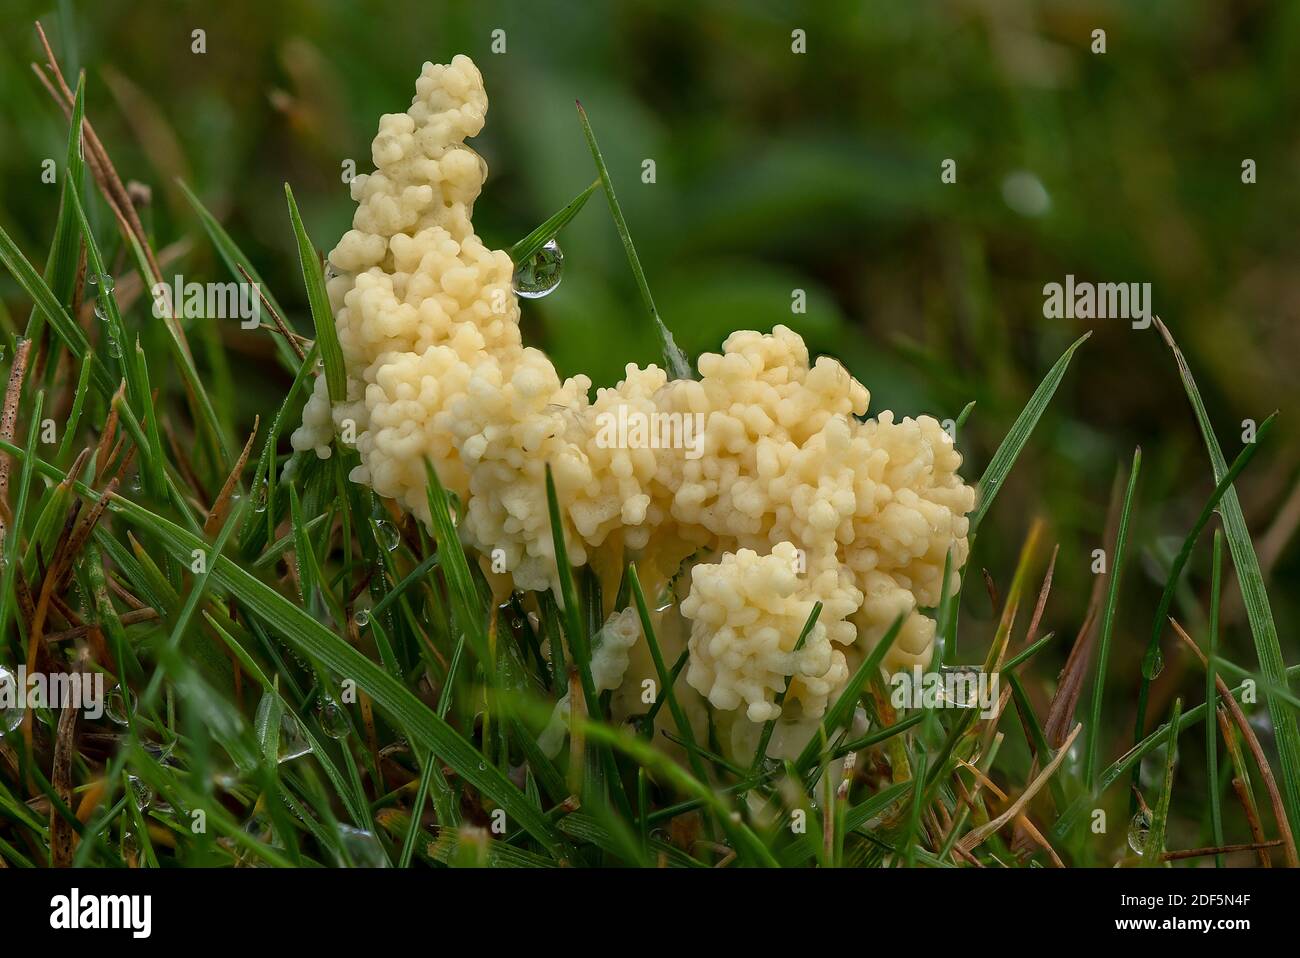 Dog sick slime mould, Mucilago crustacea on grassland in autumn. Stock Photo